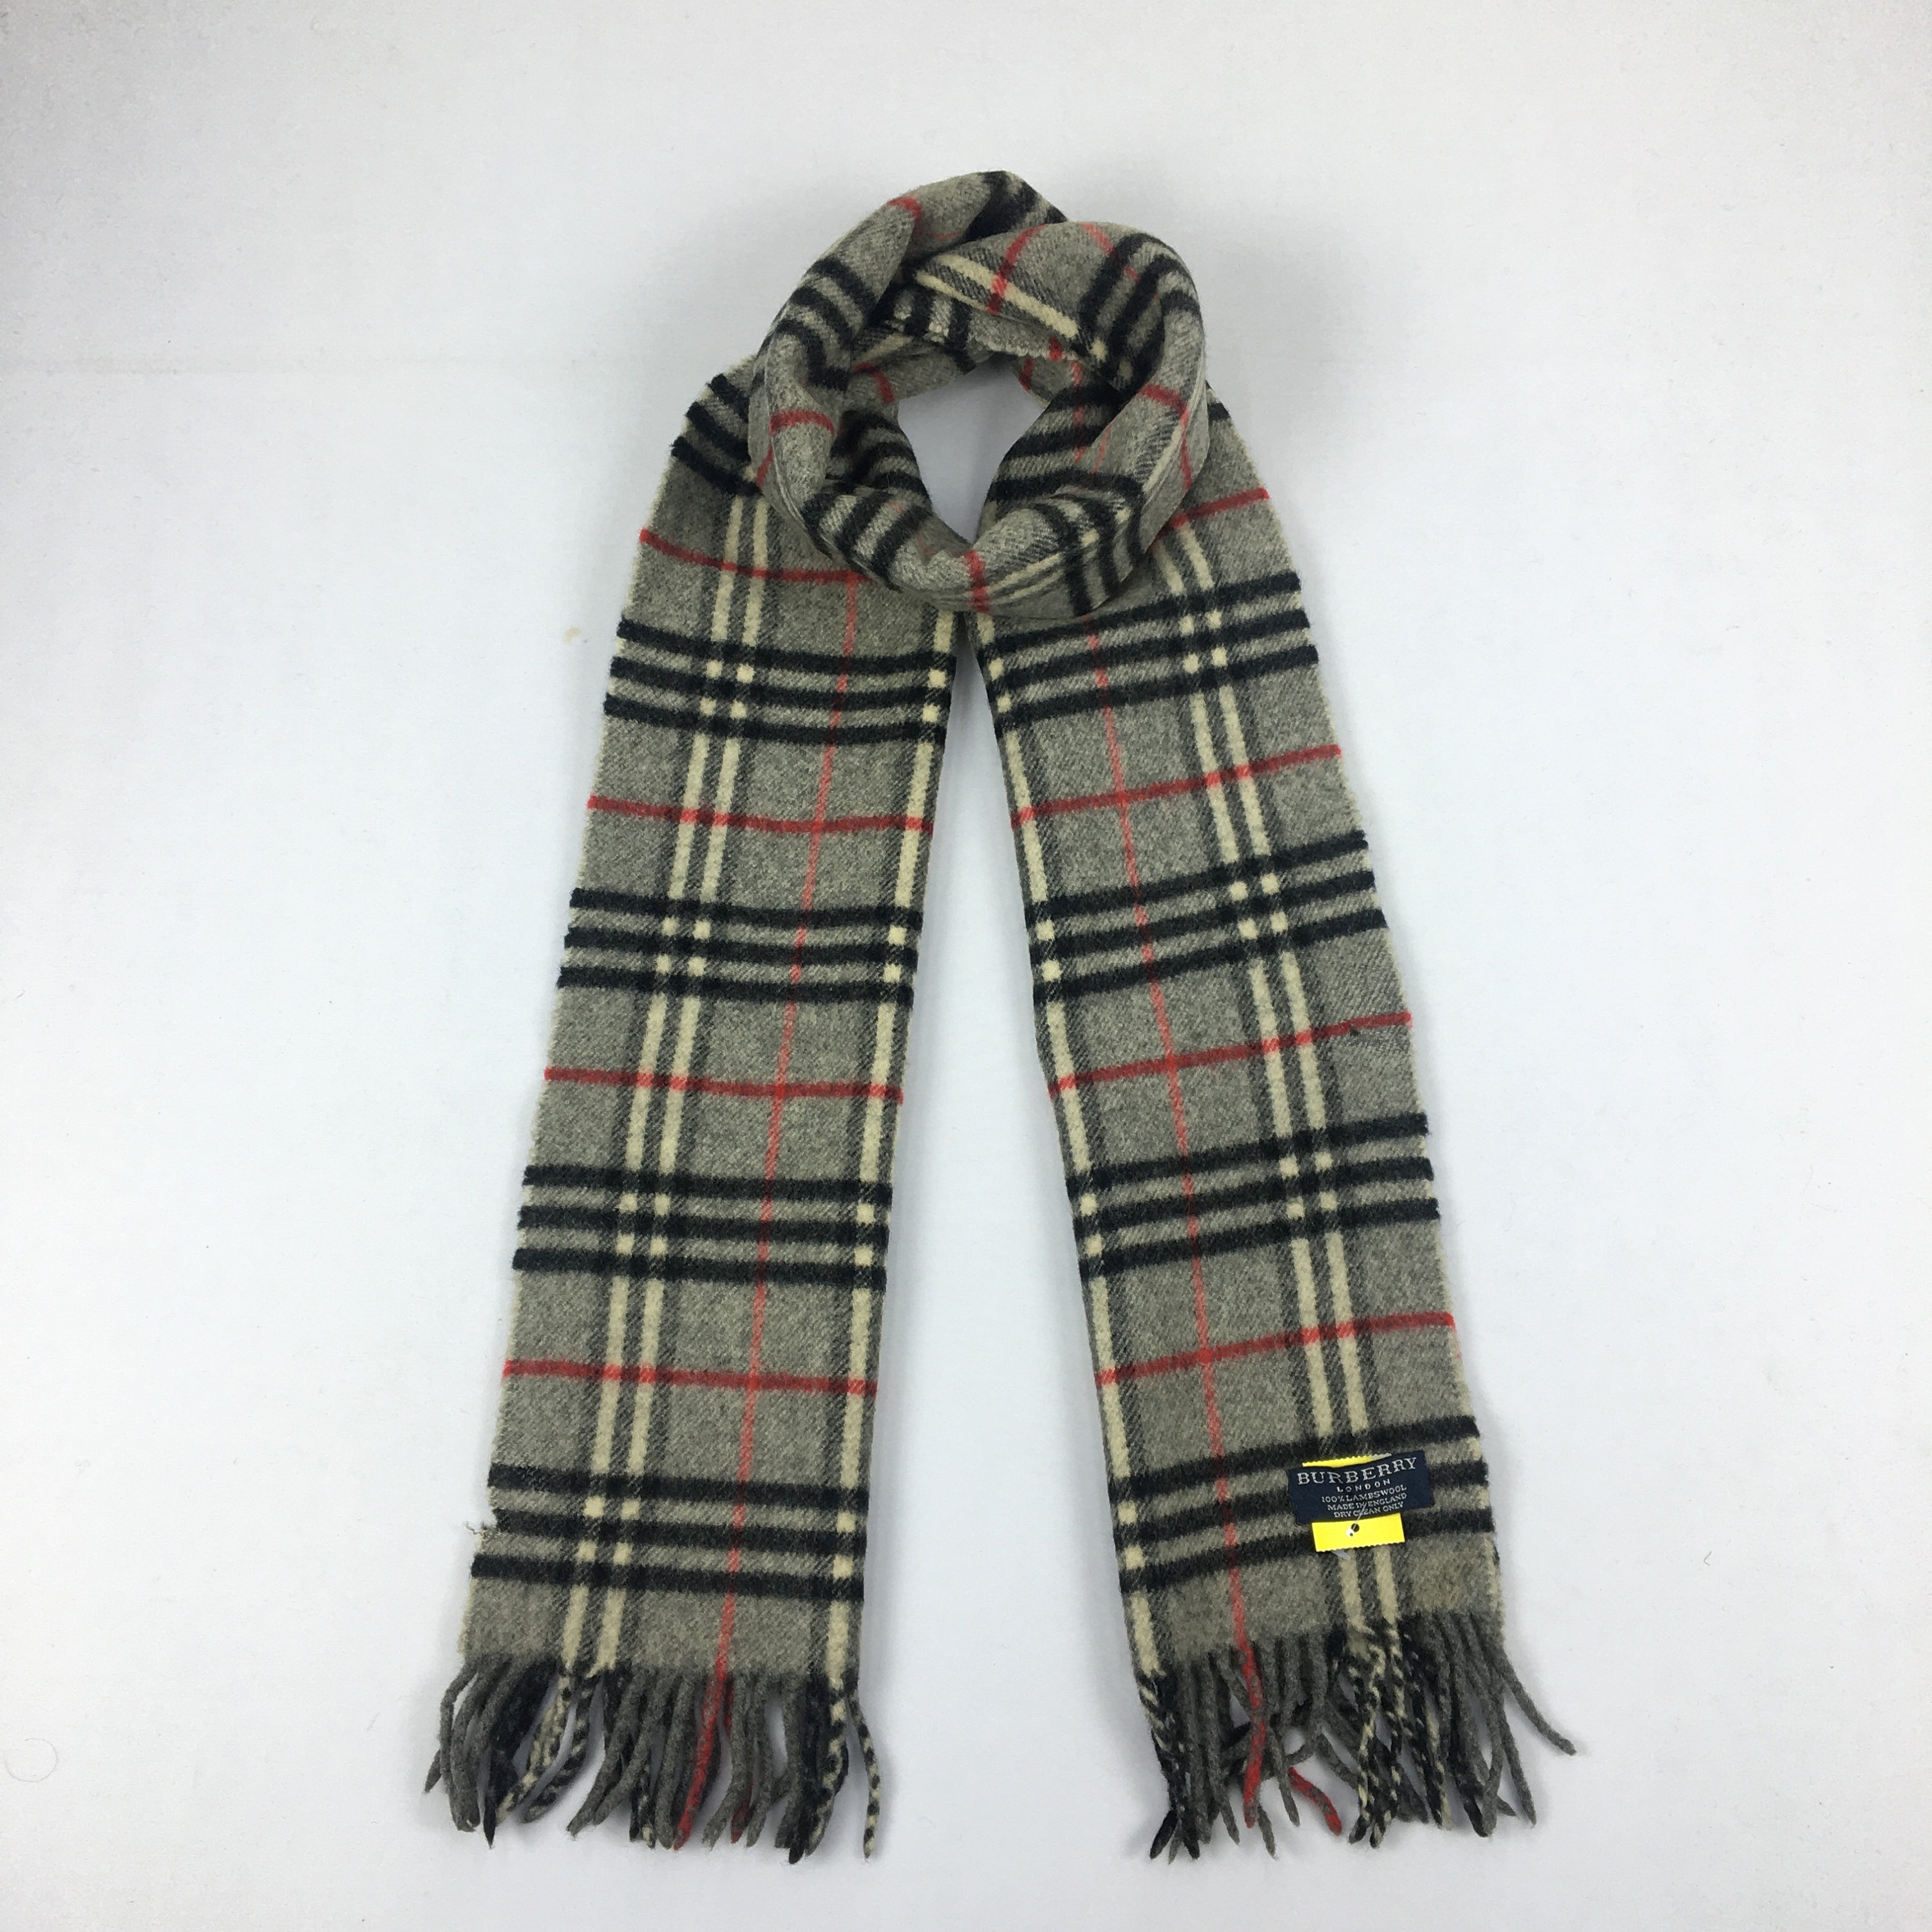 SALE! Journal Standard Scarf Muffler Wool Wrap Accessories Authentic Winter Luxury Neckwear New Year gift